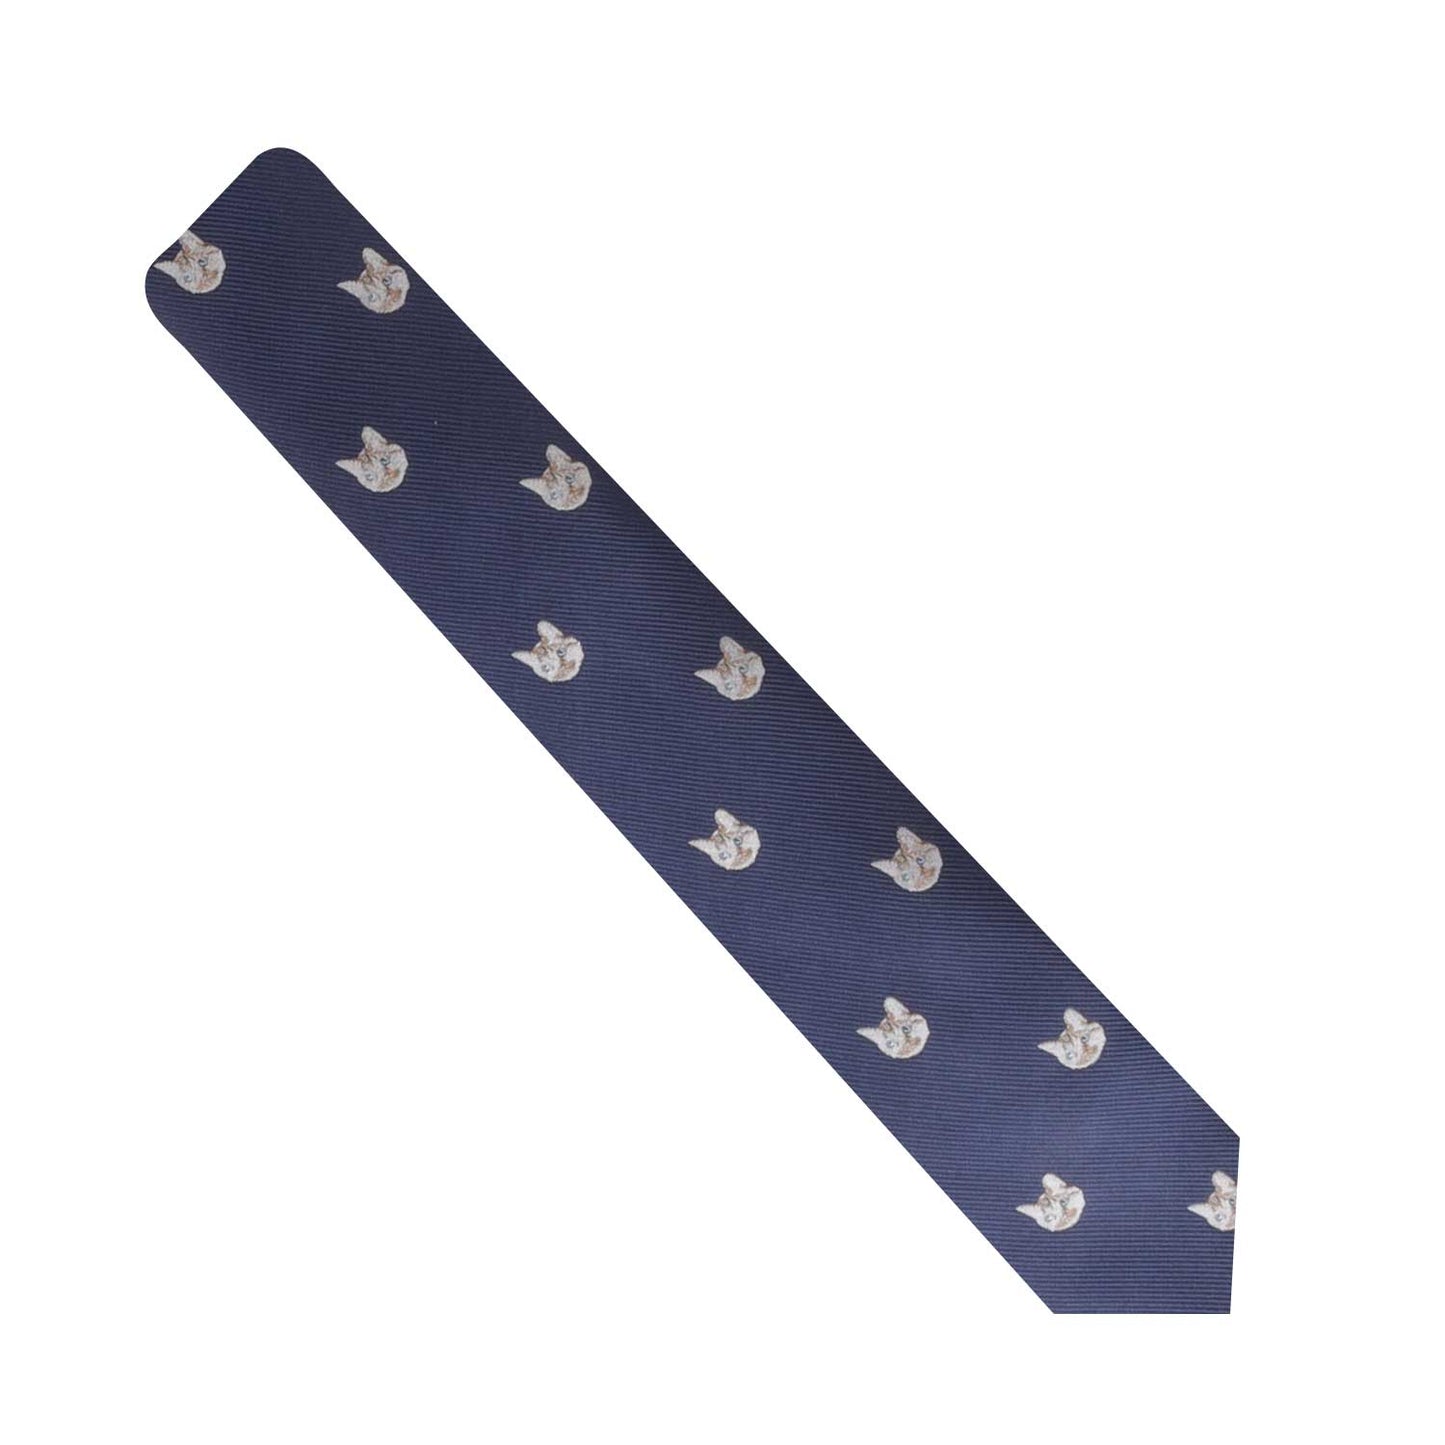 A blue Cat Skinny Tie with elegant white birds.